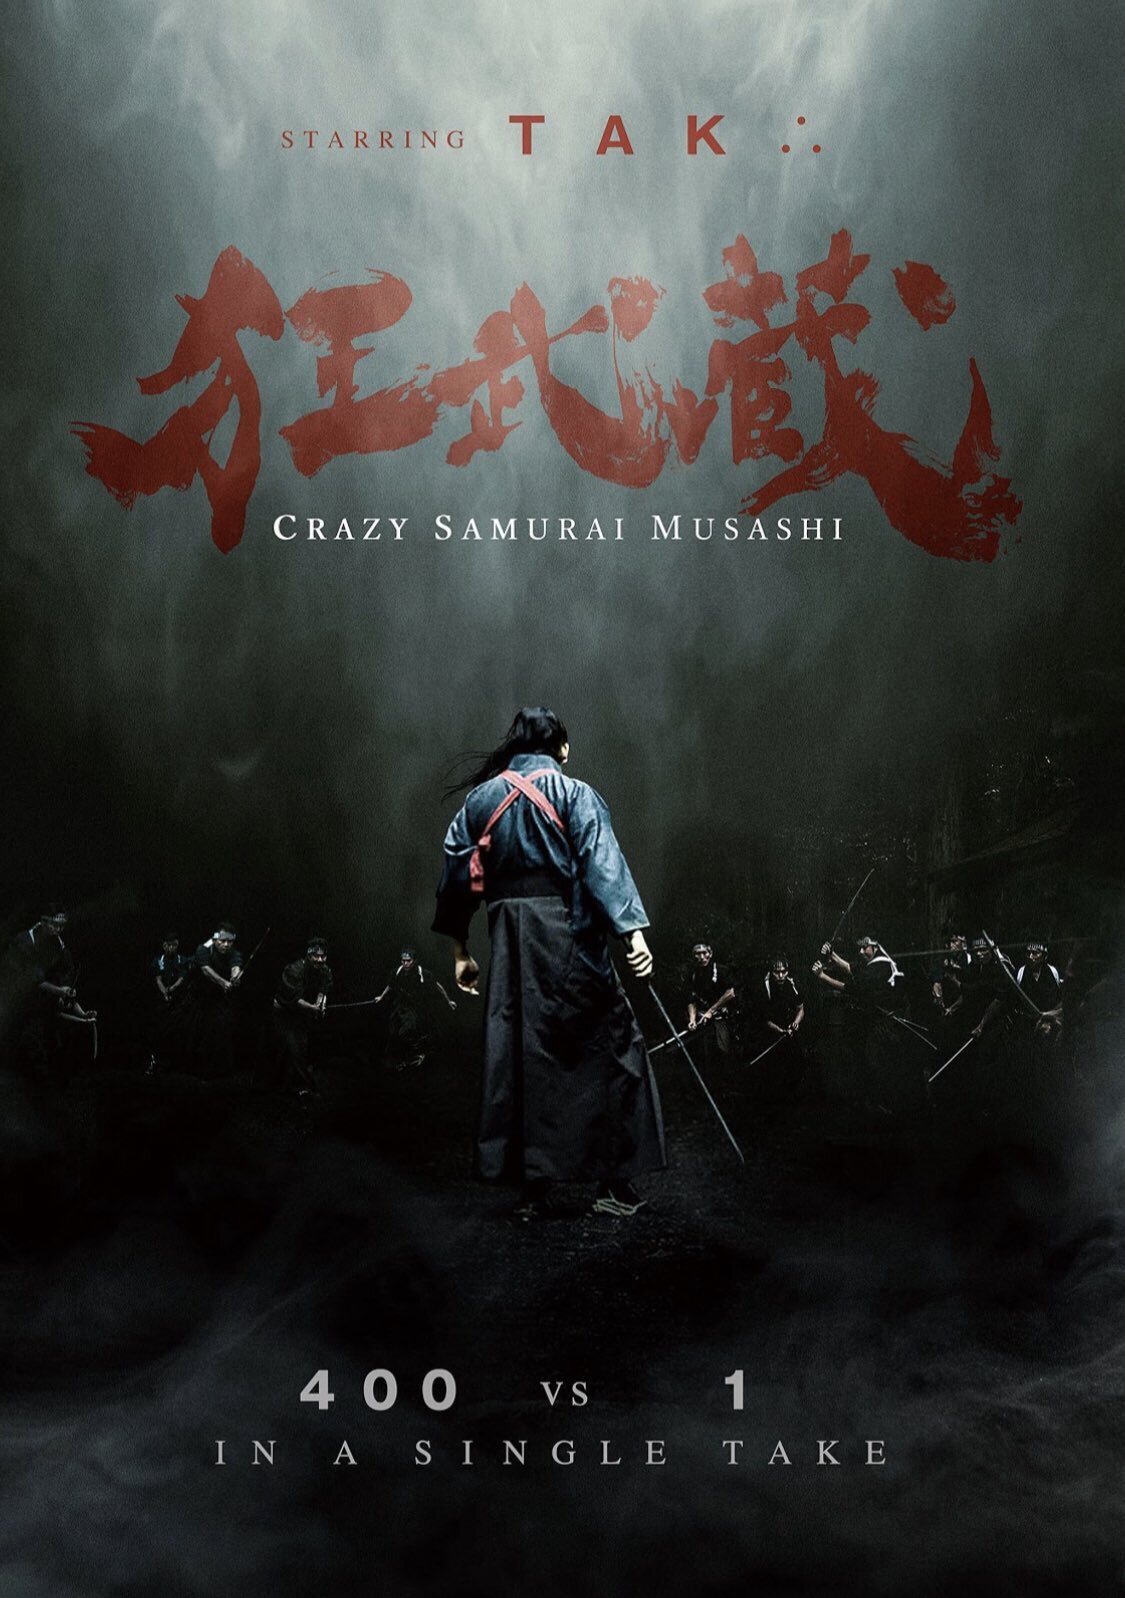 andre brissette recommends samurai movies in english pic